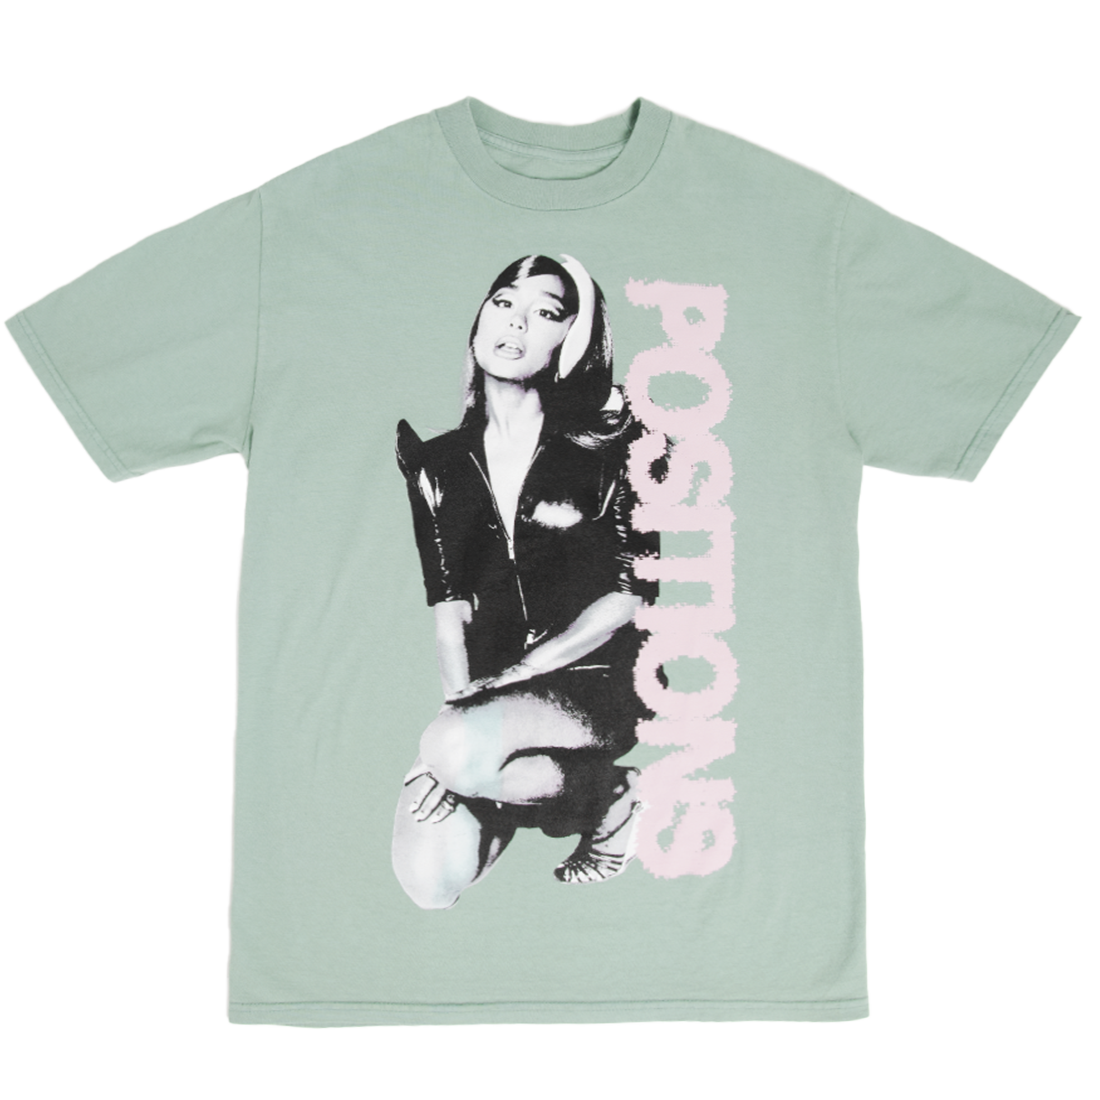 Ariana Grande - positions photo t-shirt i